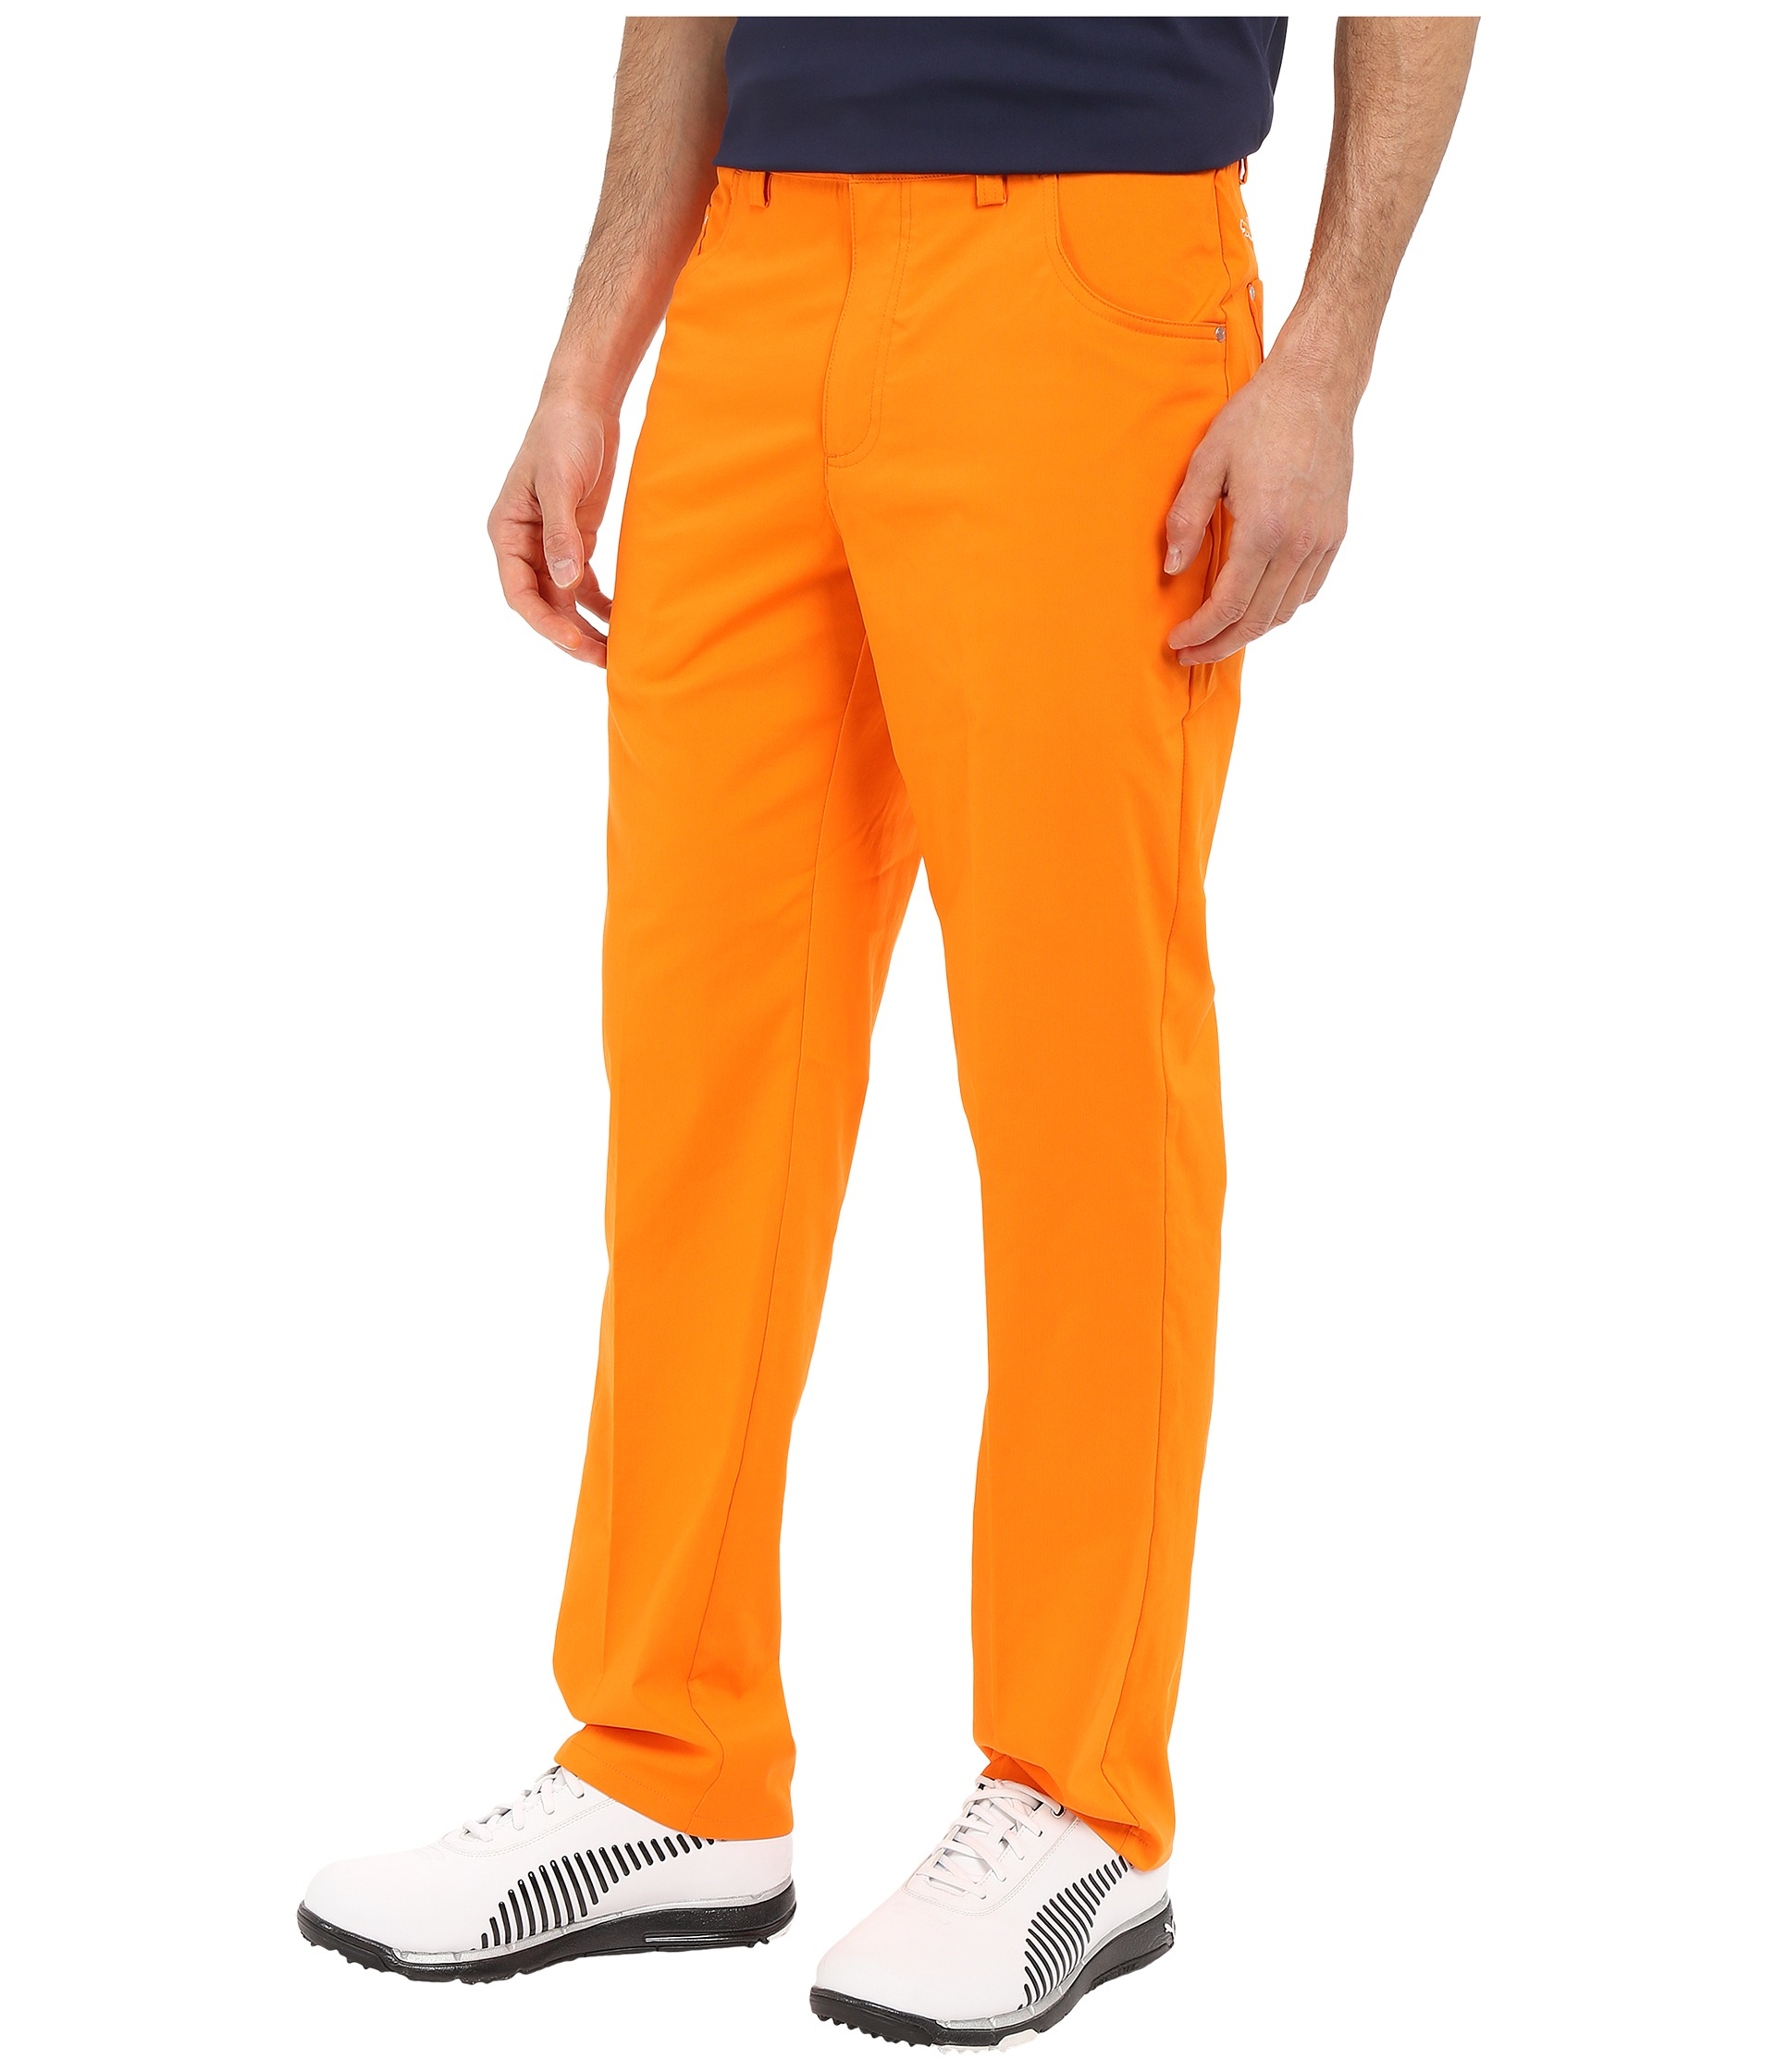 puma golf vibrant orange 6 pocket pants orange product 3 035819145 normal